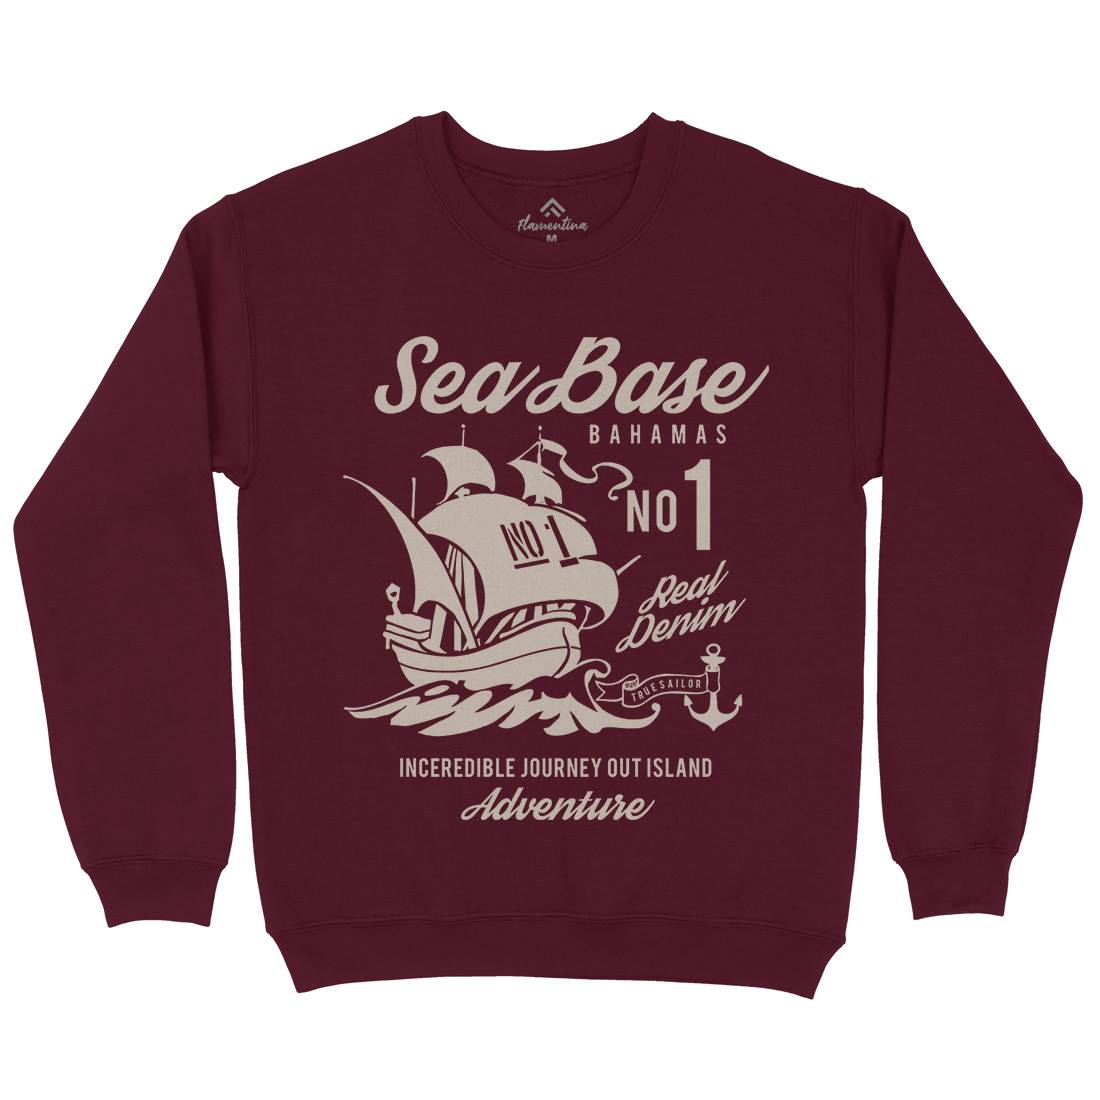 Sea Base Kids Crew Neck Sweatshirt Navy B252